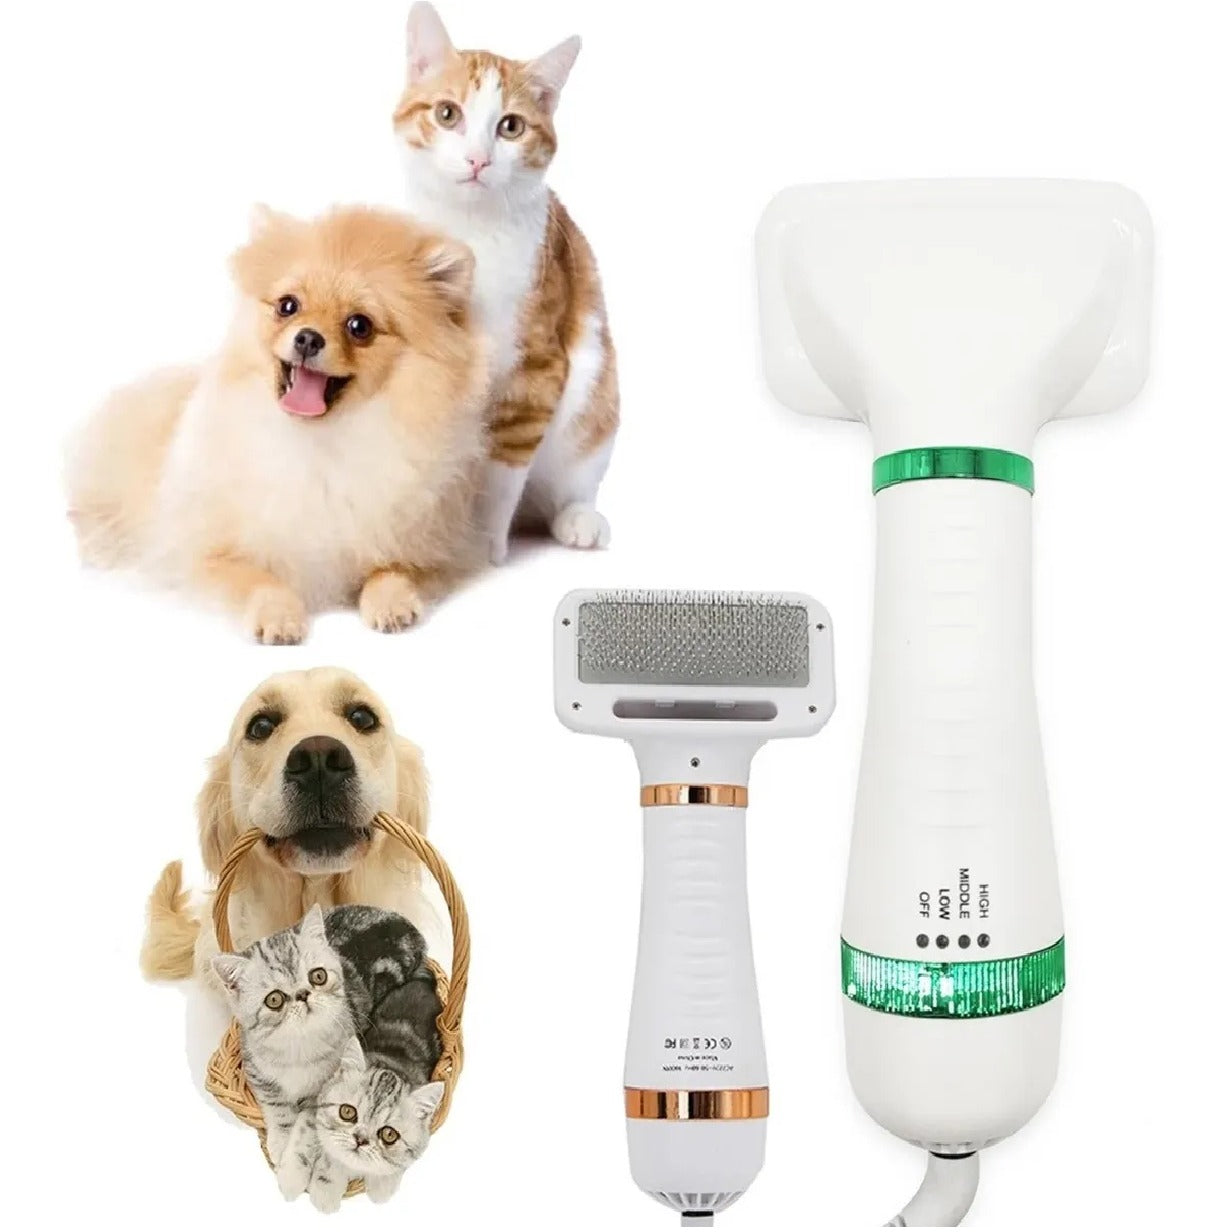 Cepillo Aspirador para mascota REVIEW / Pro PET GROMMING /Vale la pena 